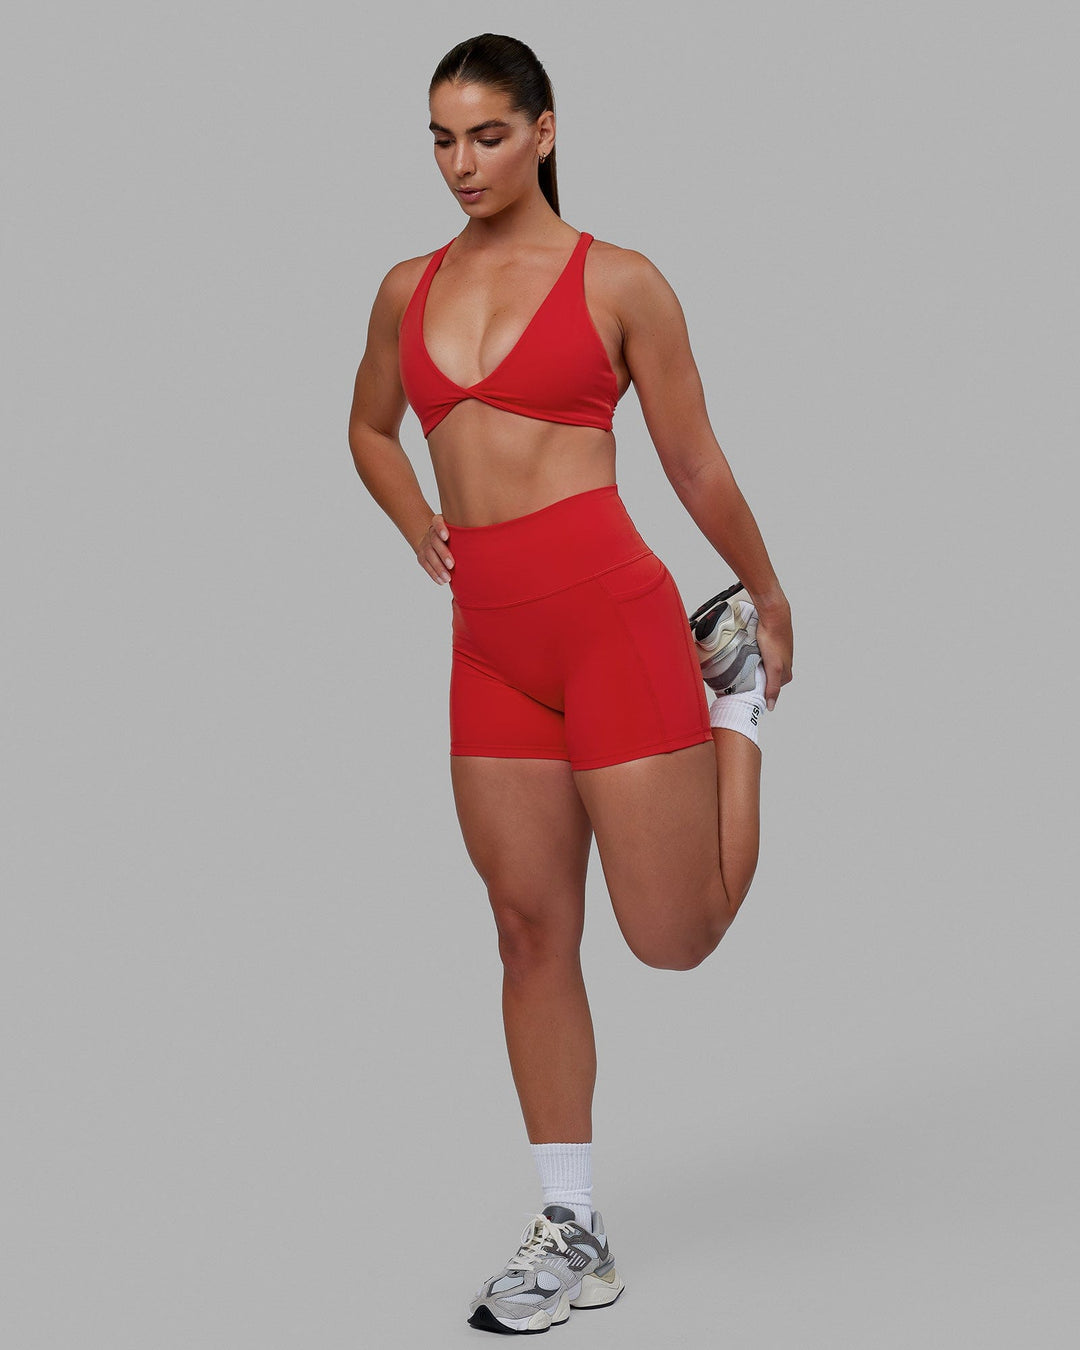 Woman wearing Agile Sports Bra - Infrared